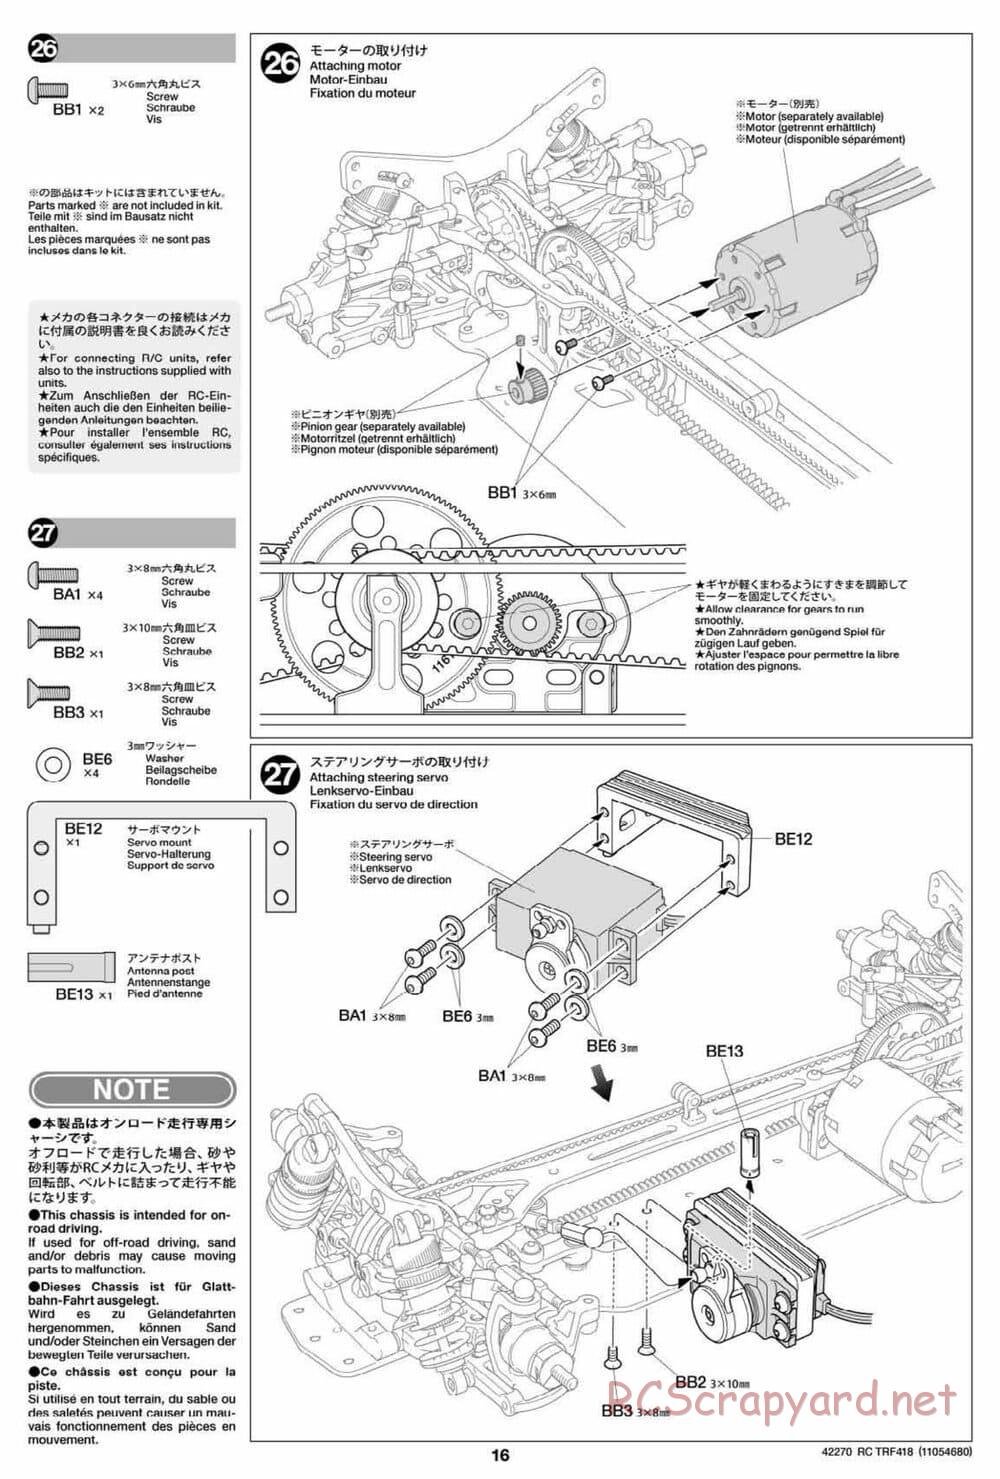 Tamiya - TRF418 Chassis - Manual - Page 16